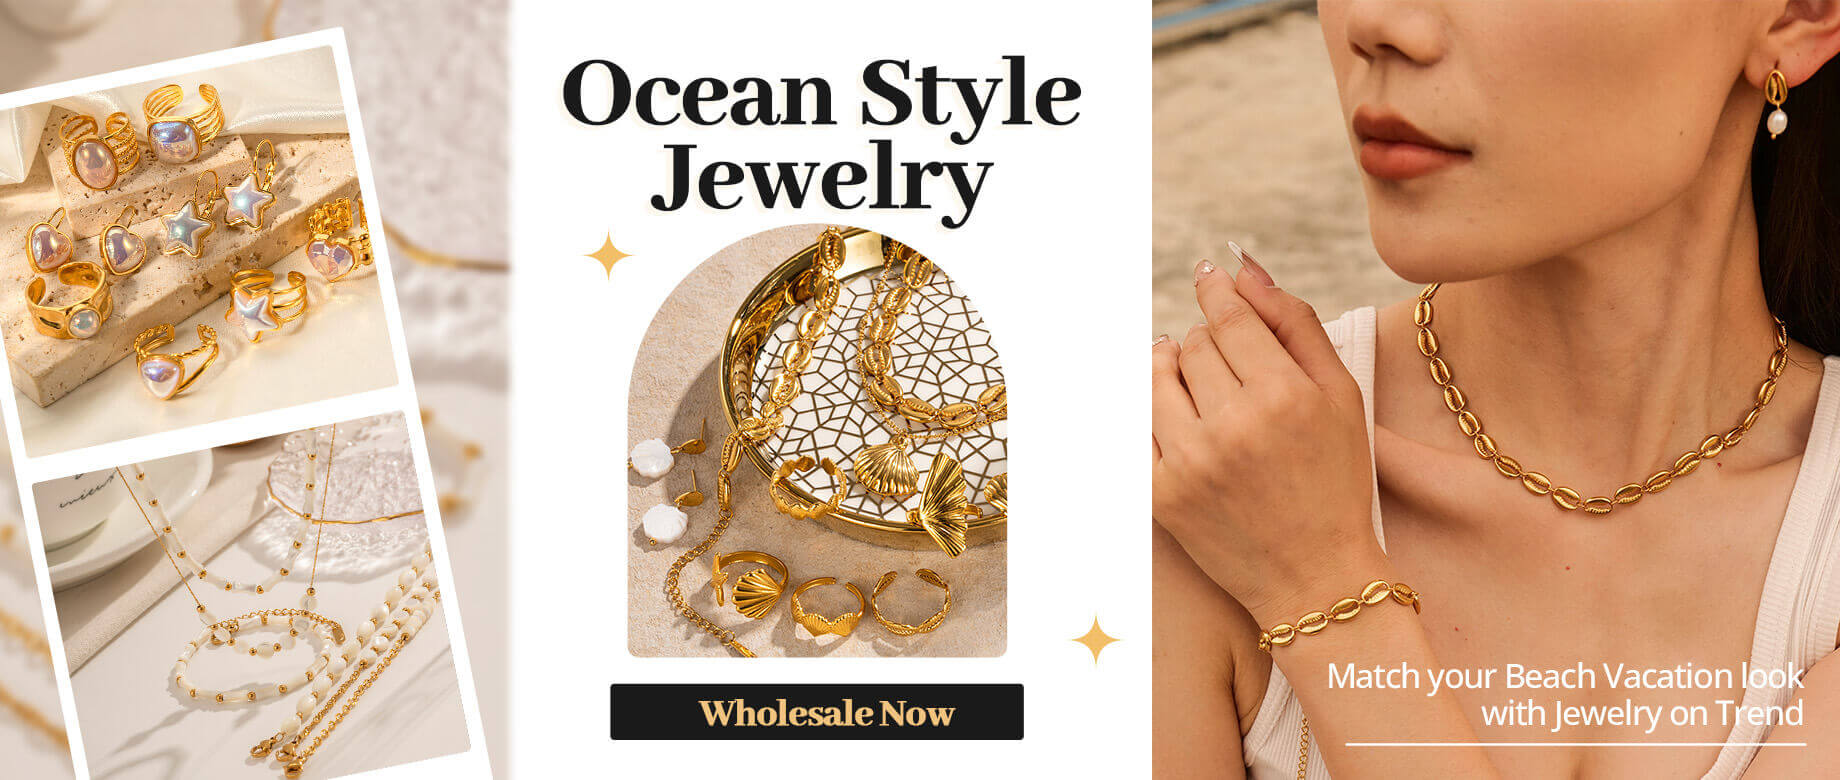 Ocean style jewelry